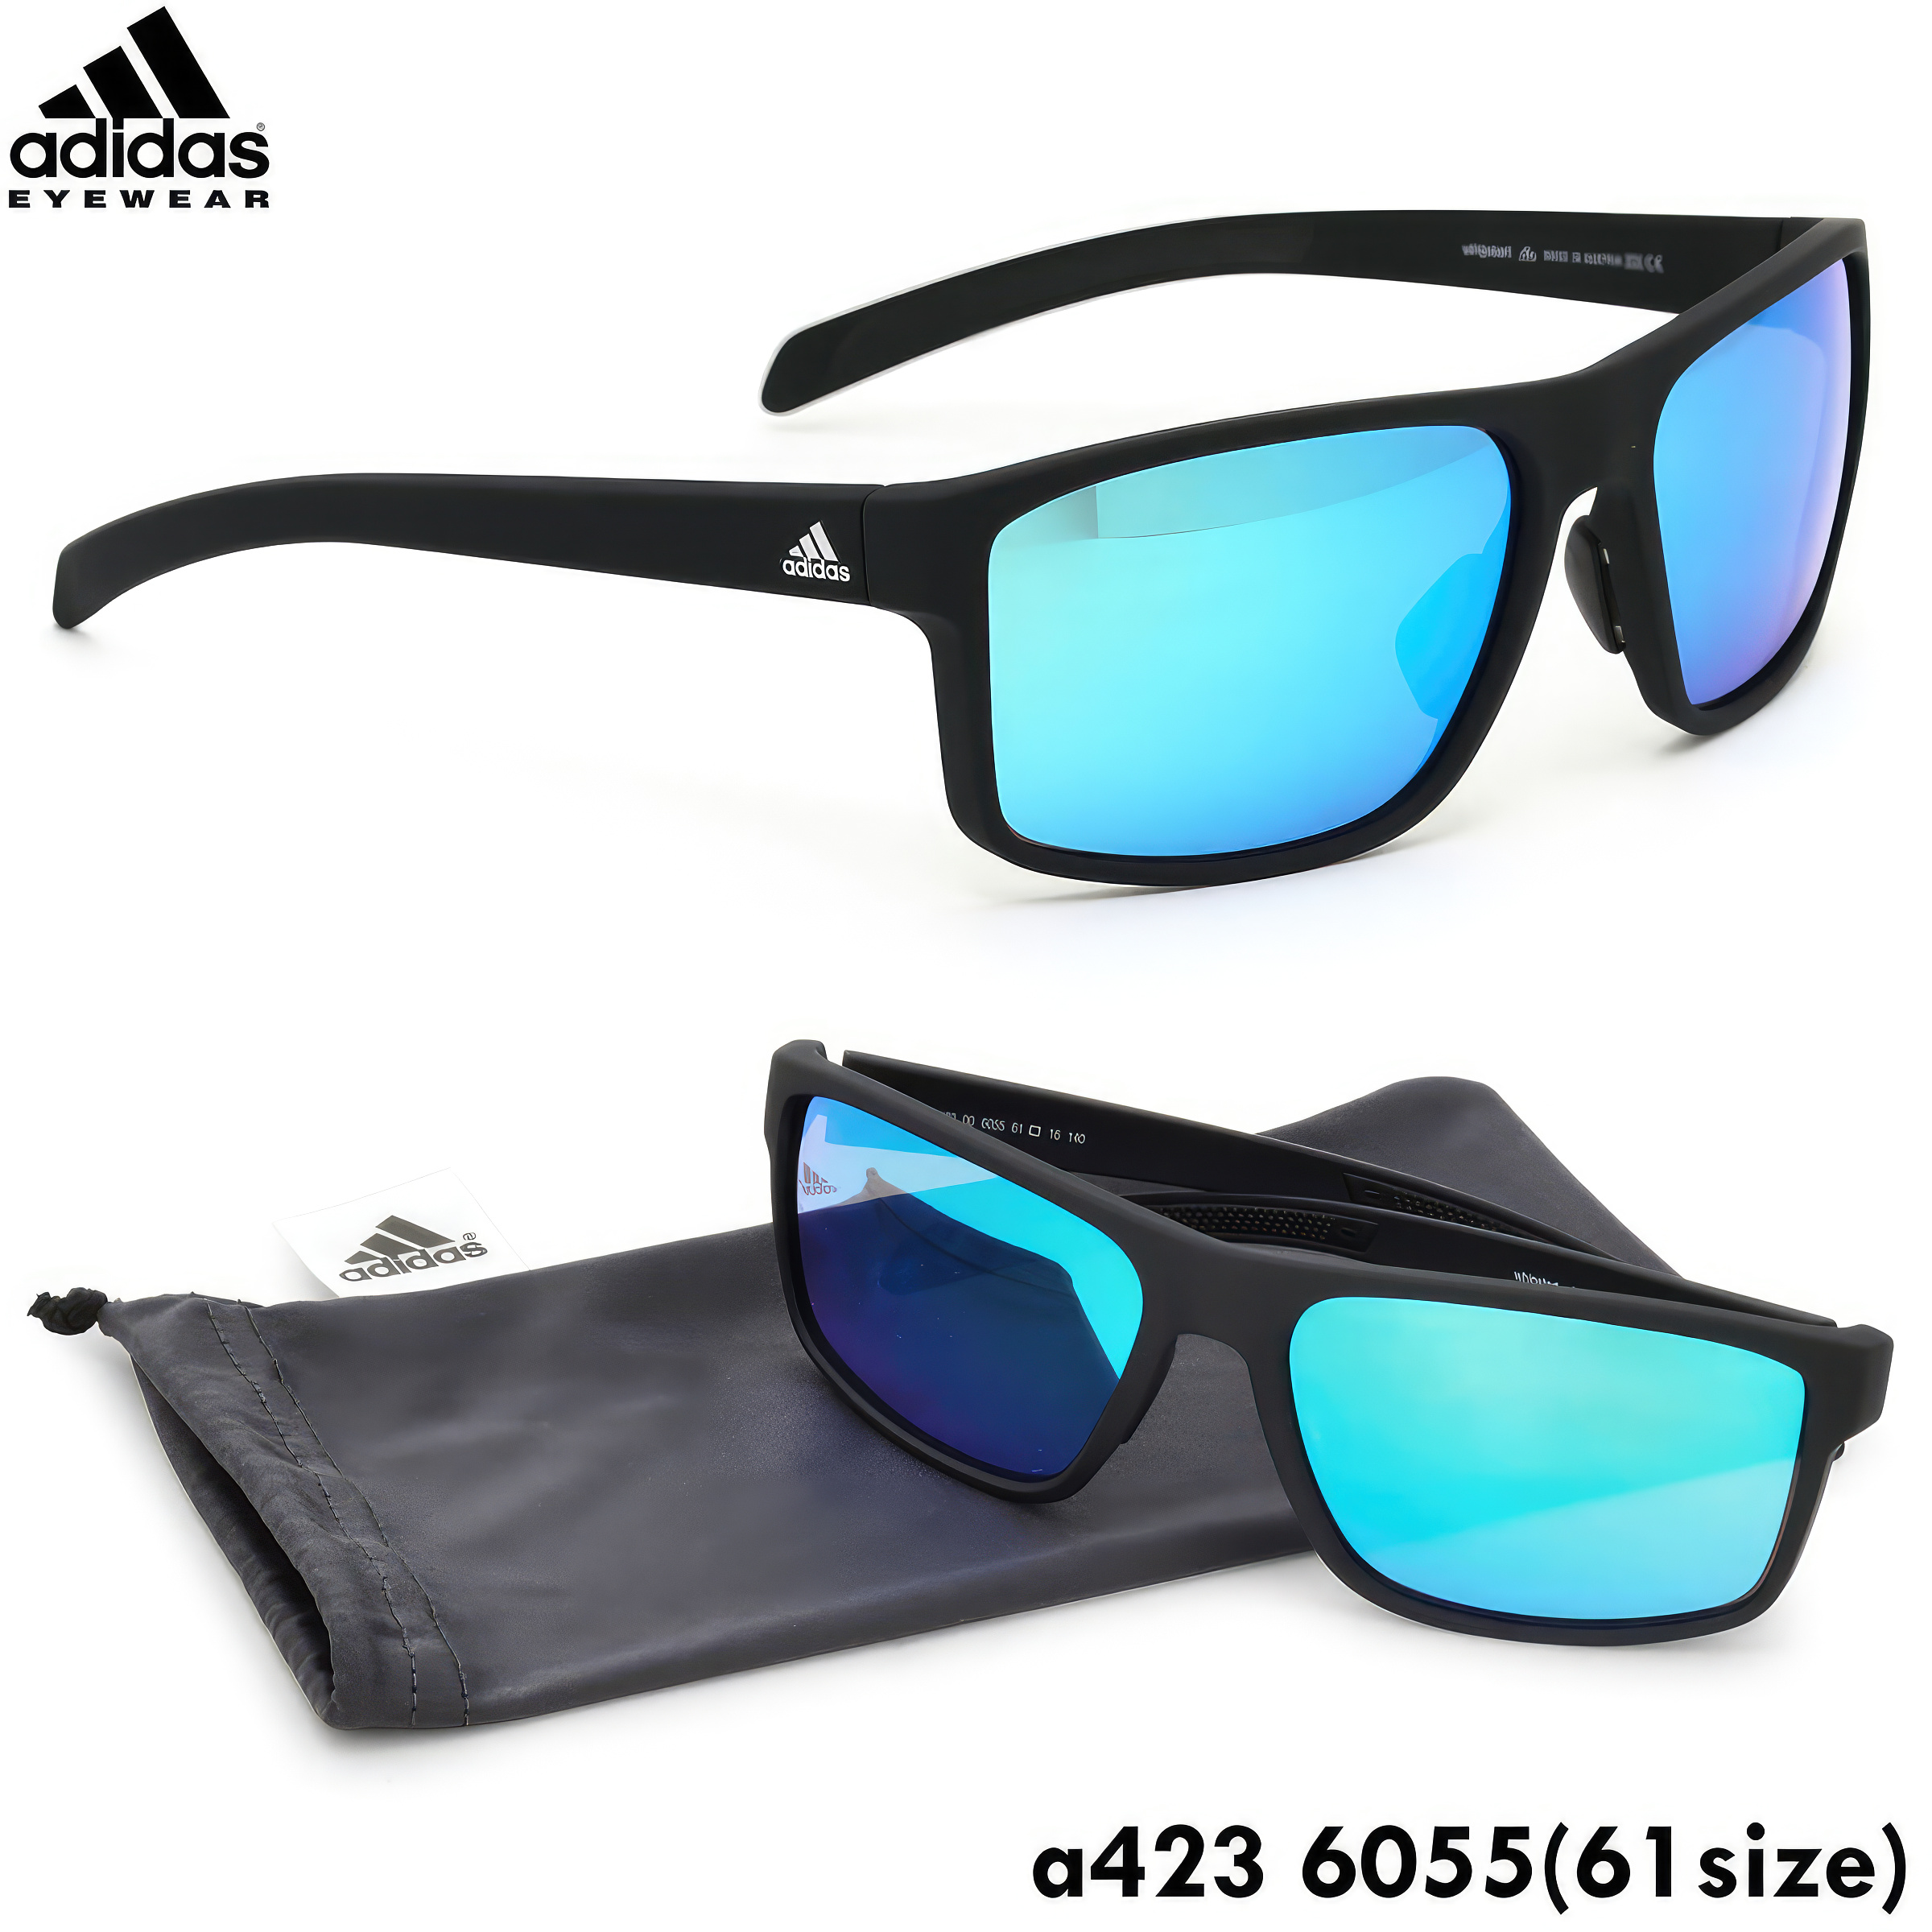 adidas sunglasses new zealand